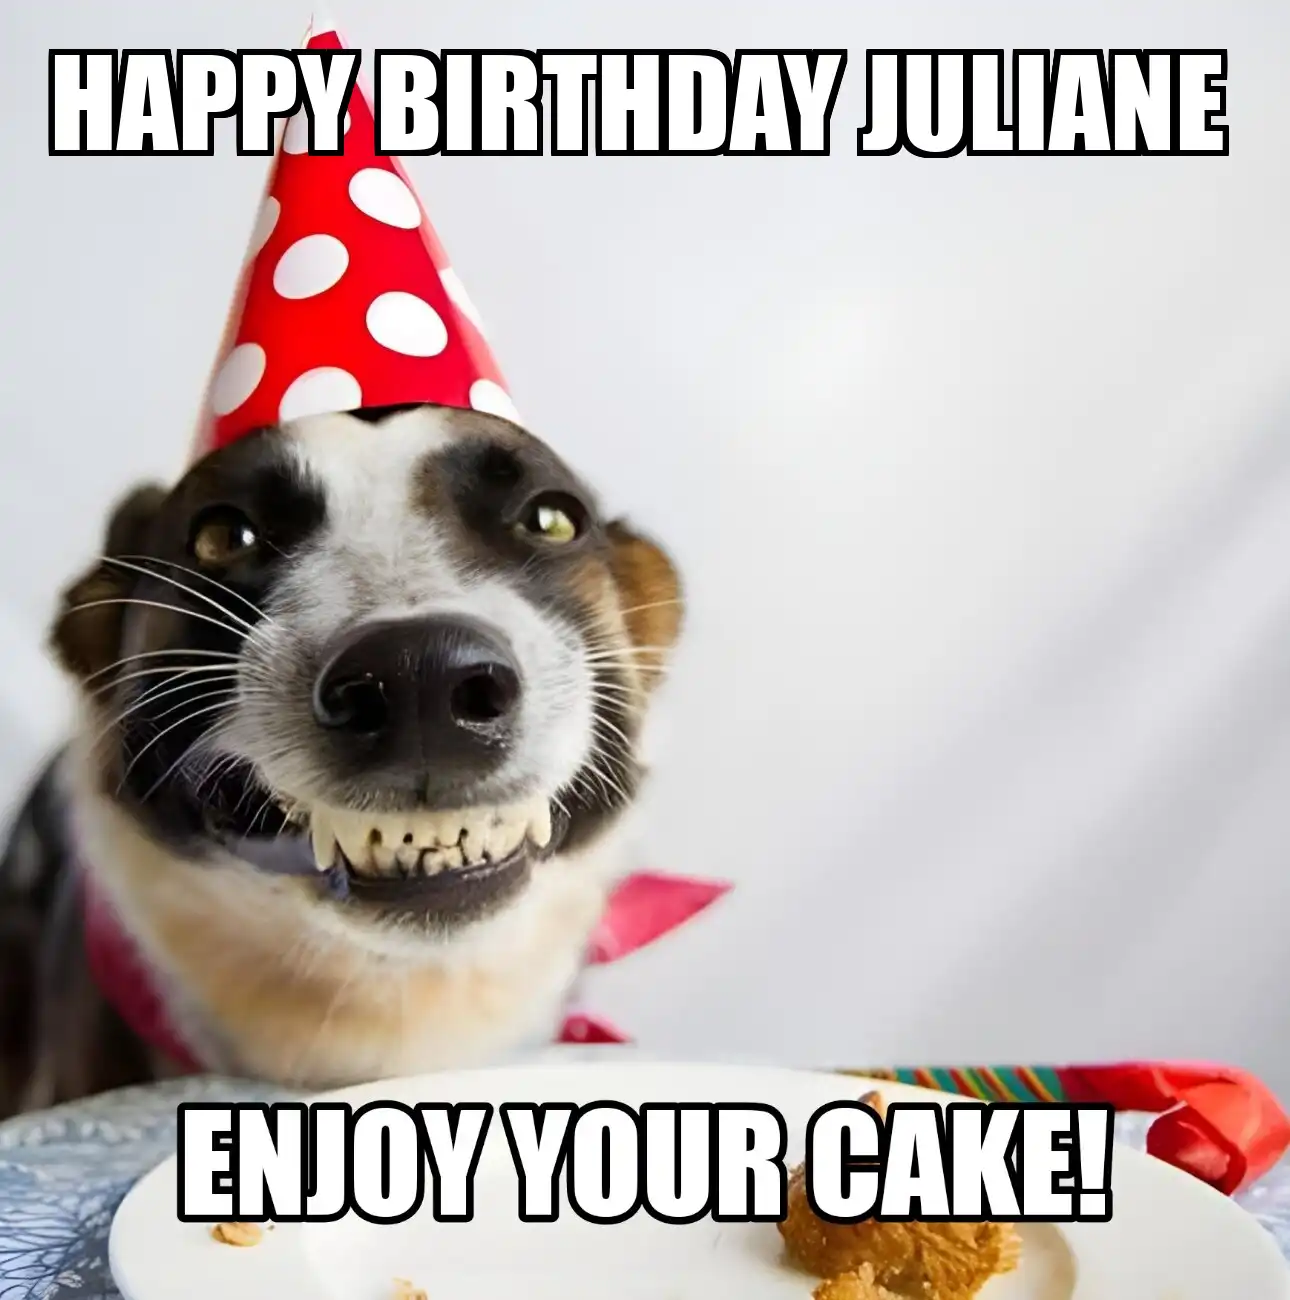 Happy Birthday Juliane Enjoy Your Cake Dog Meme